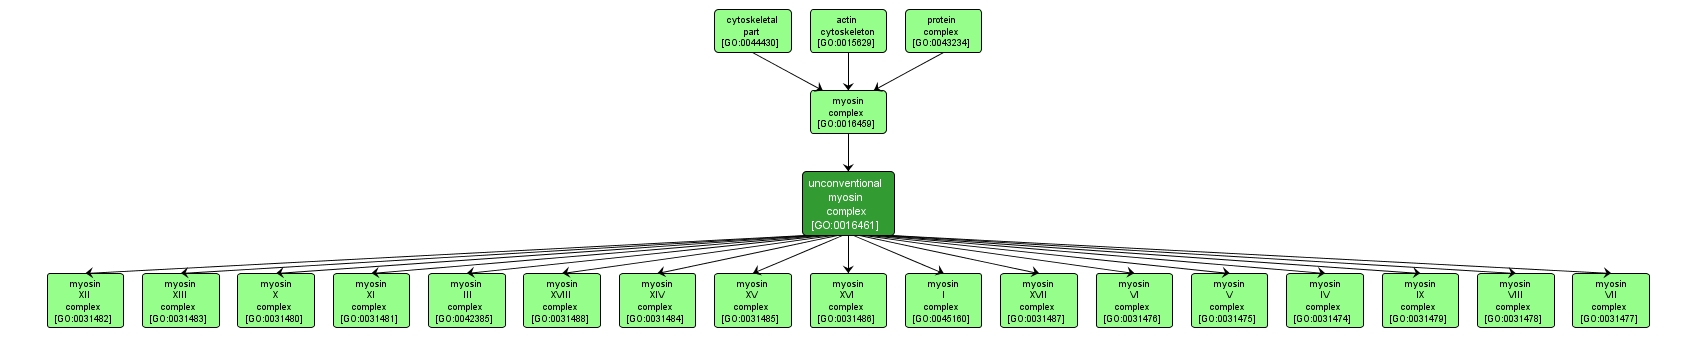 GO:0016461 - unconventional myosin complex (interactive image map)